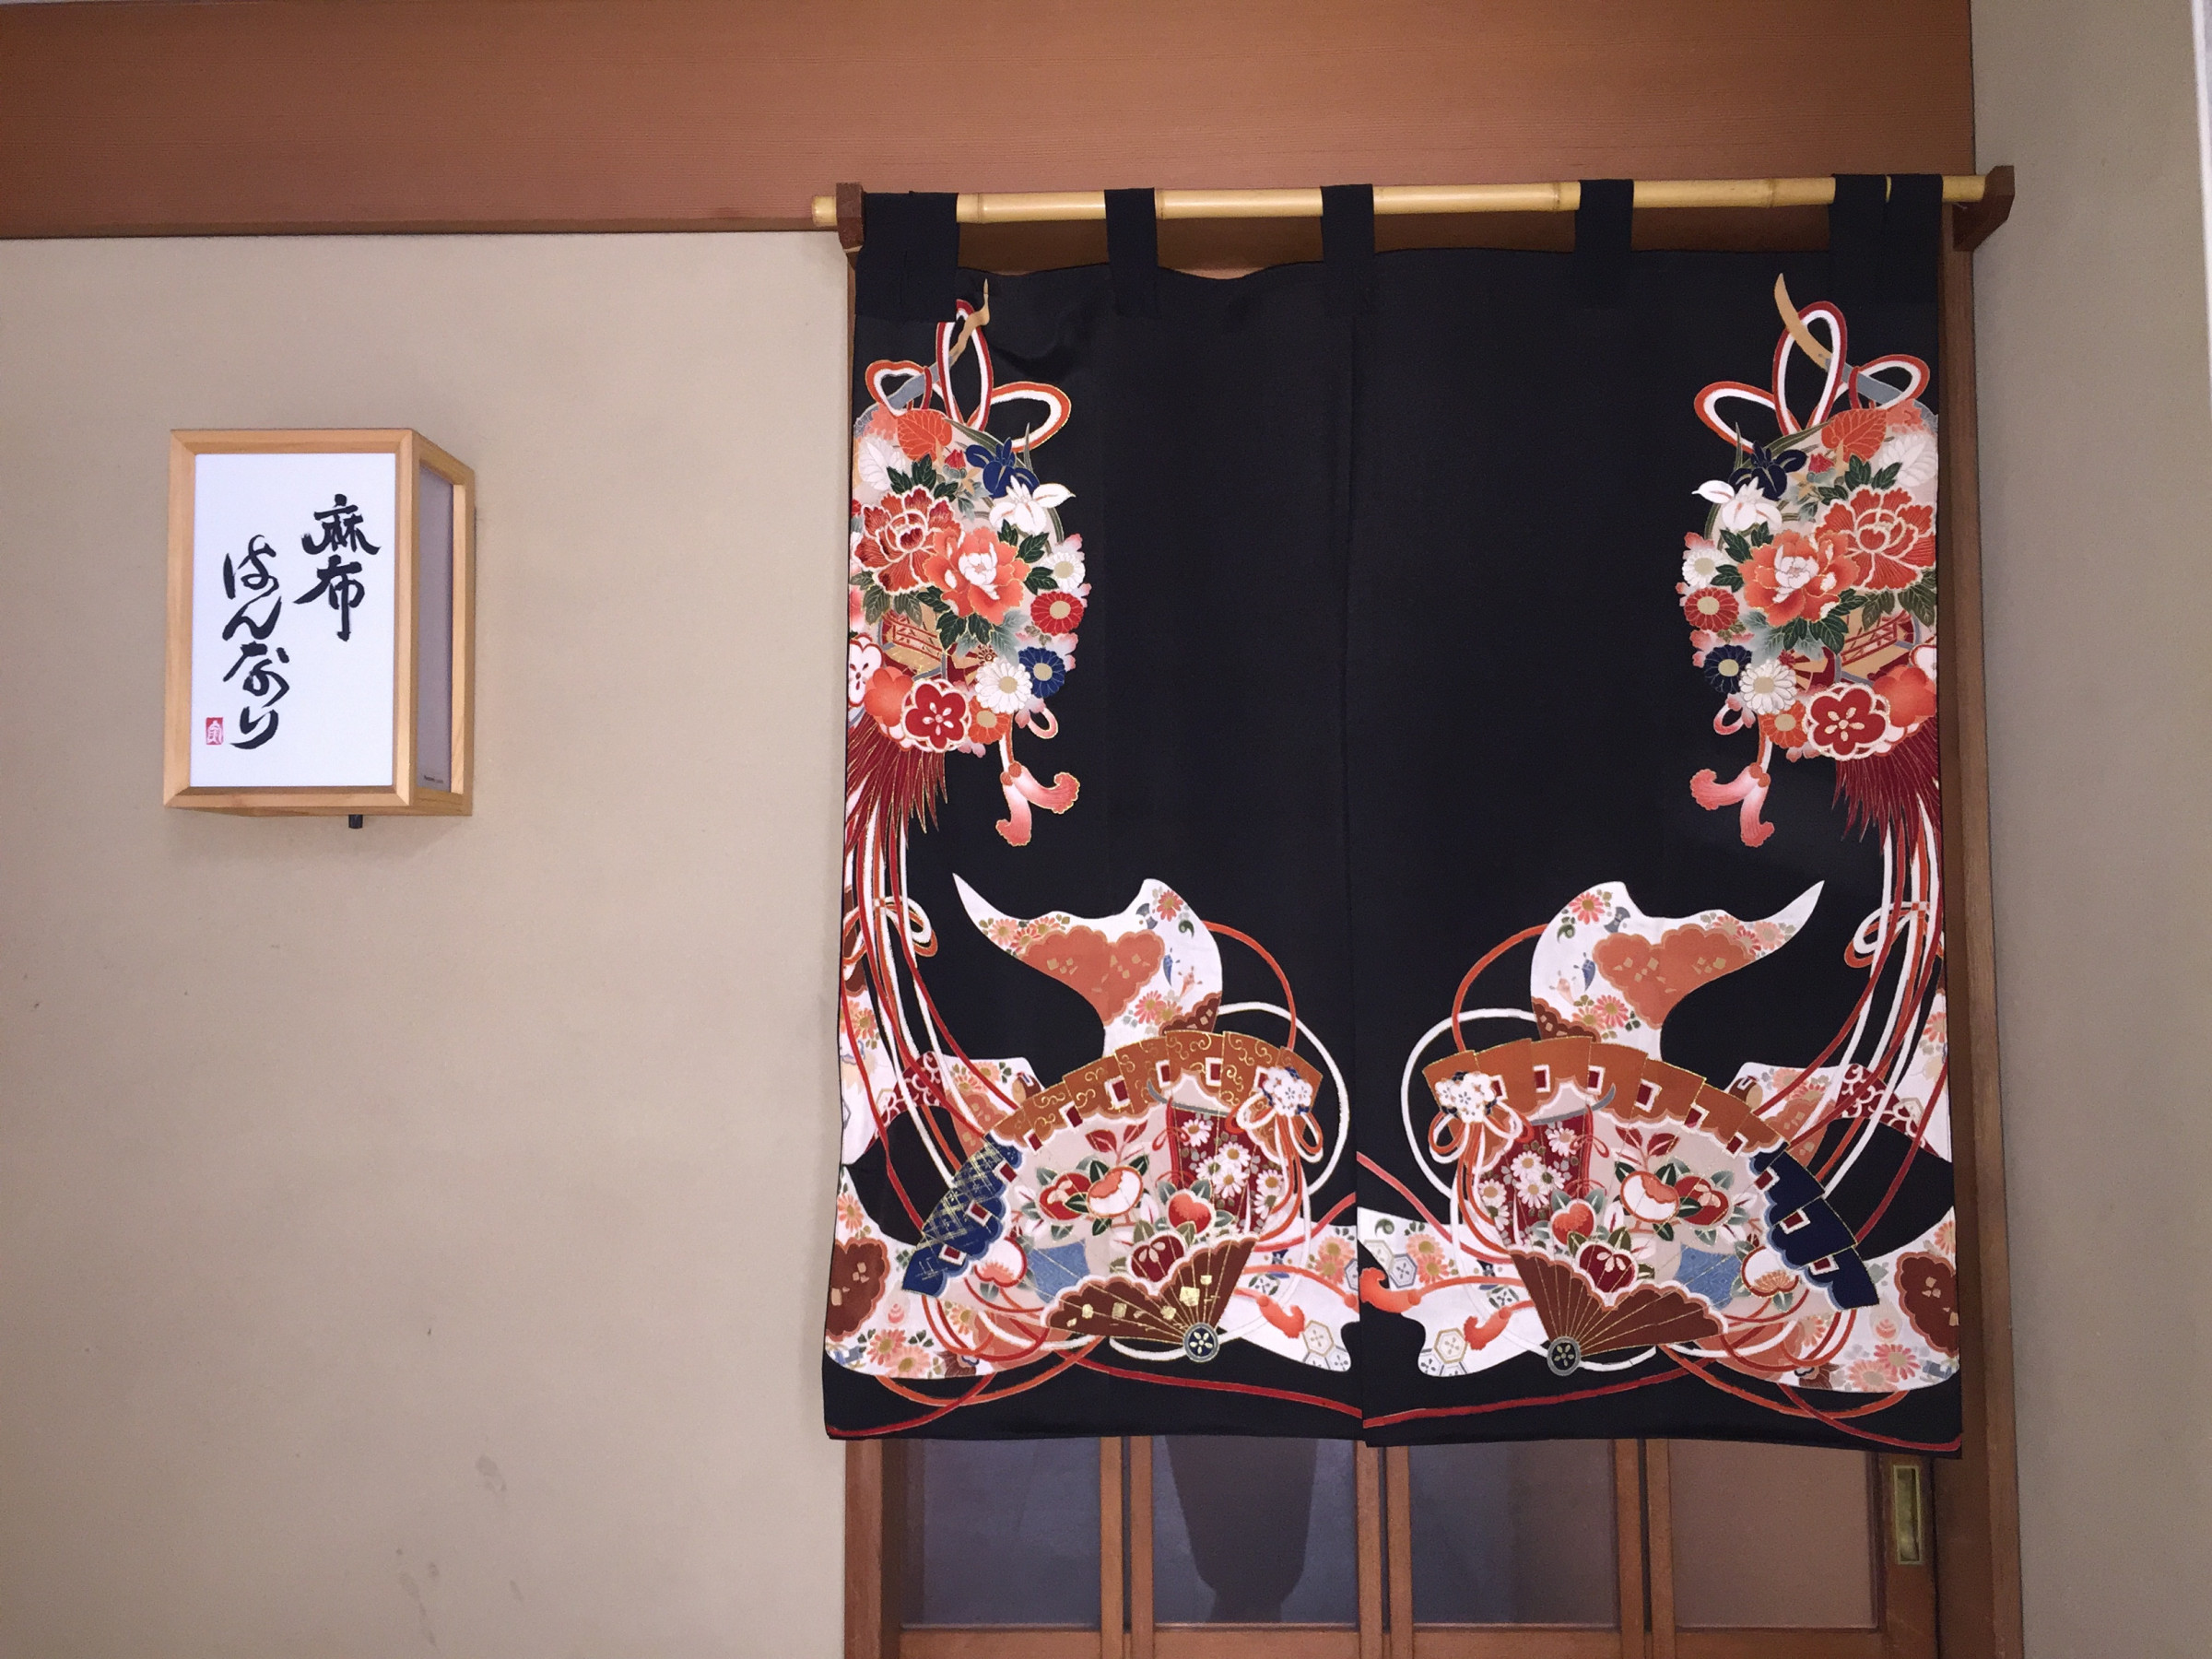 Kimono Artist TOMOKO